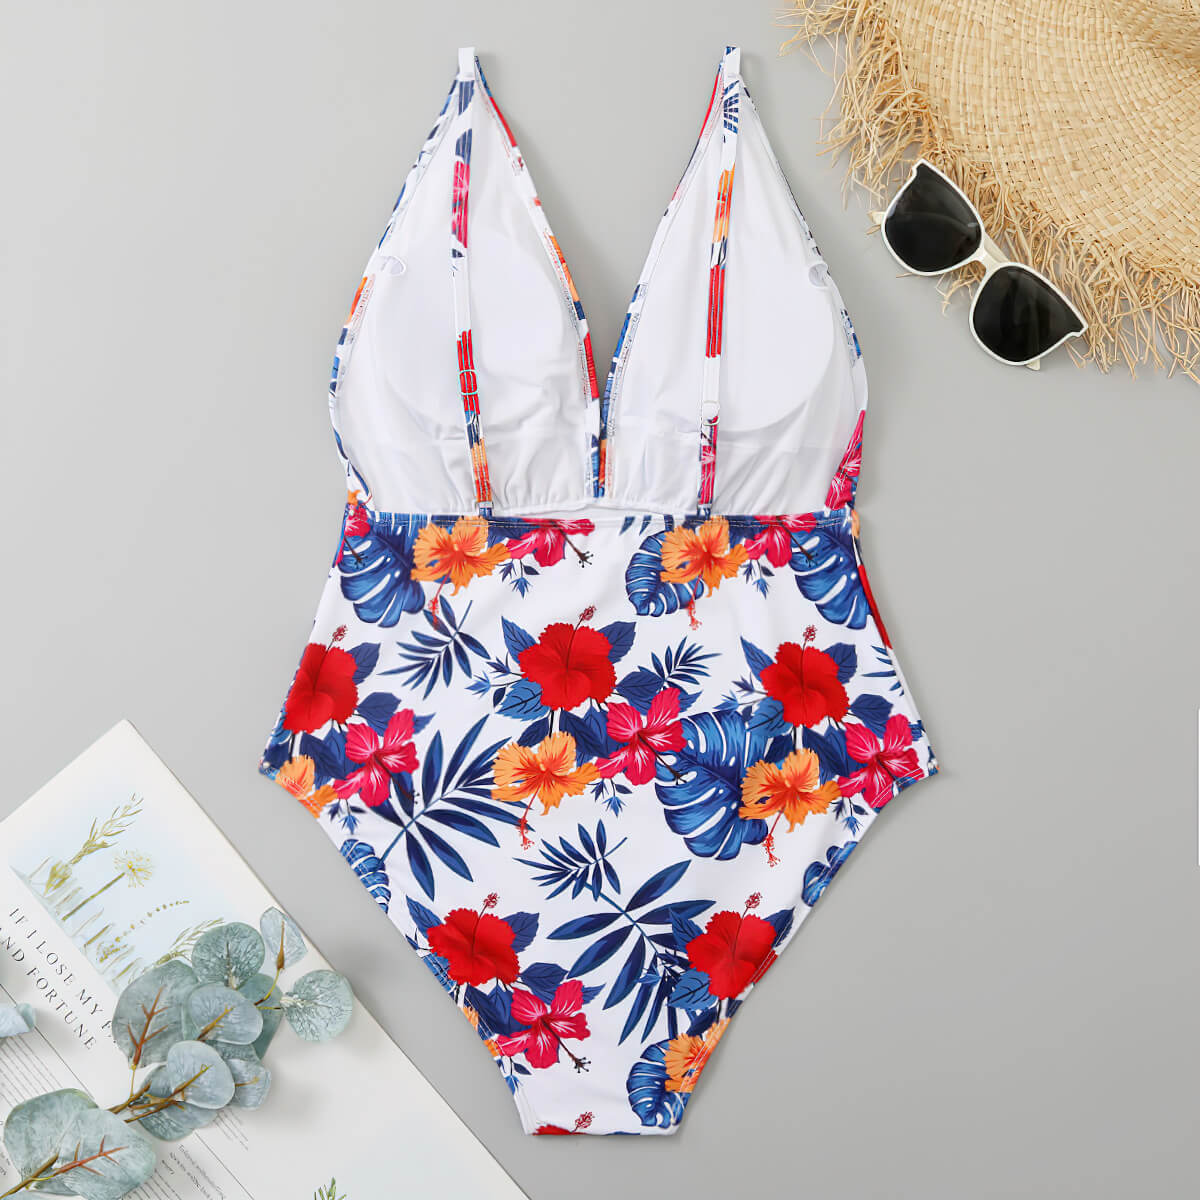 Plus Size Cheeky Swimsuit Flower Print